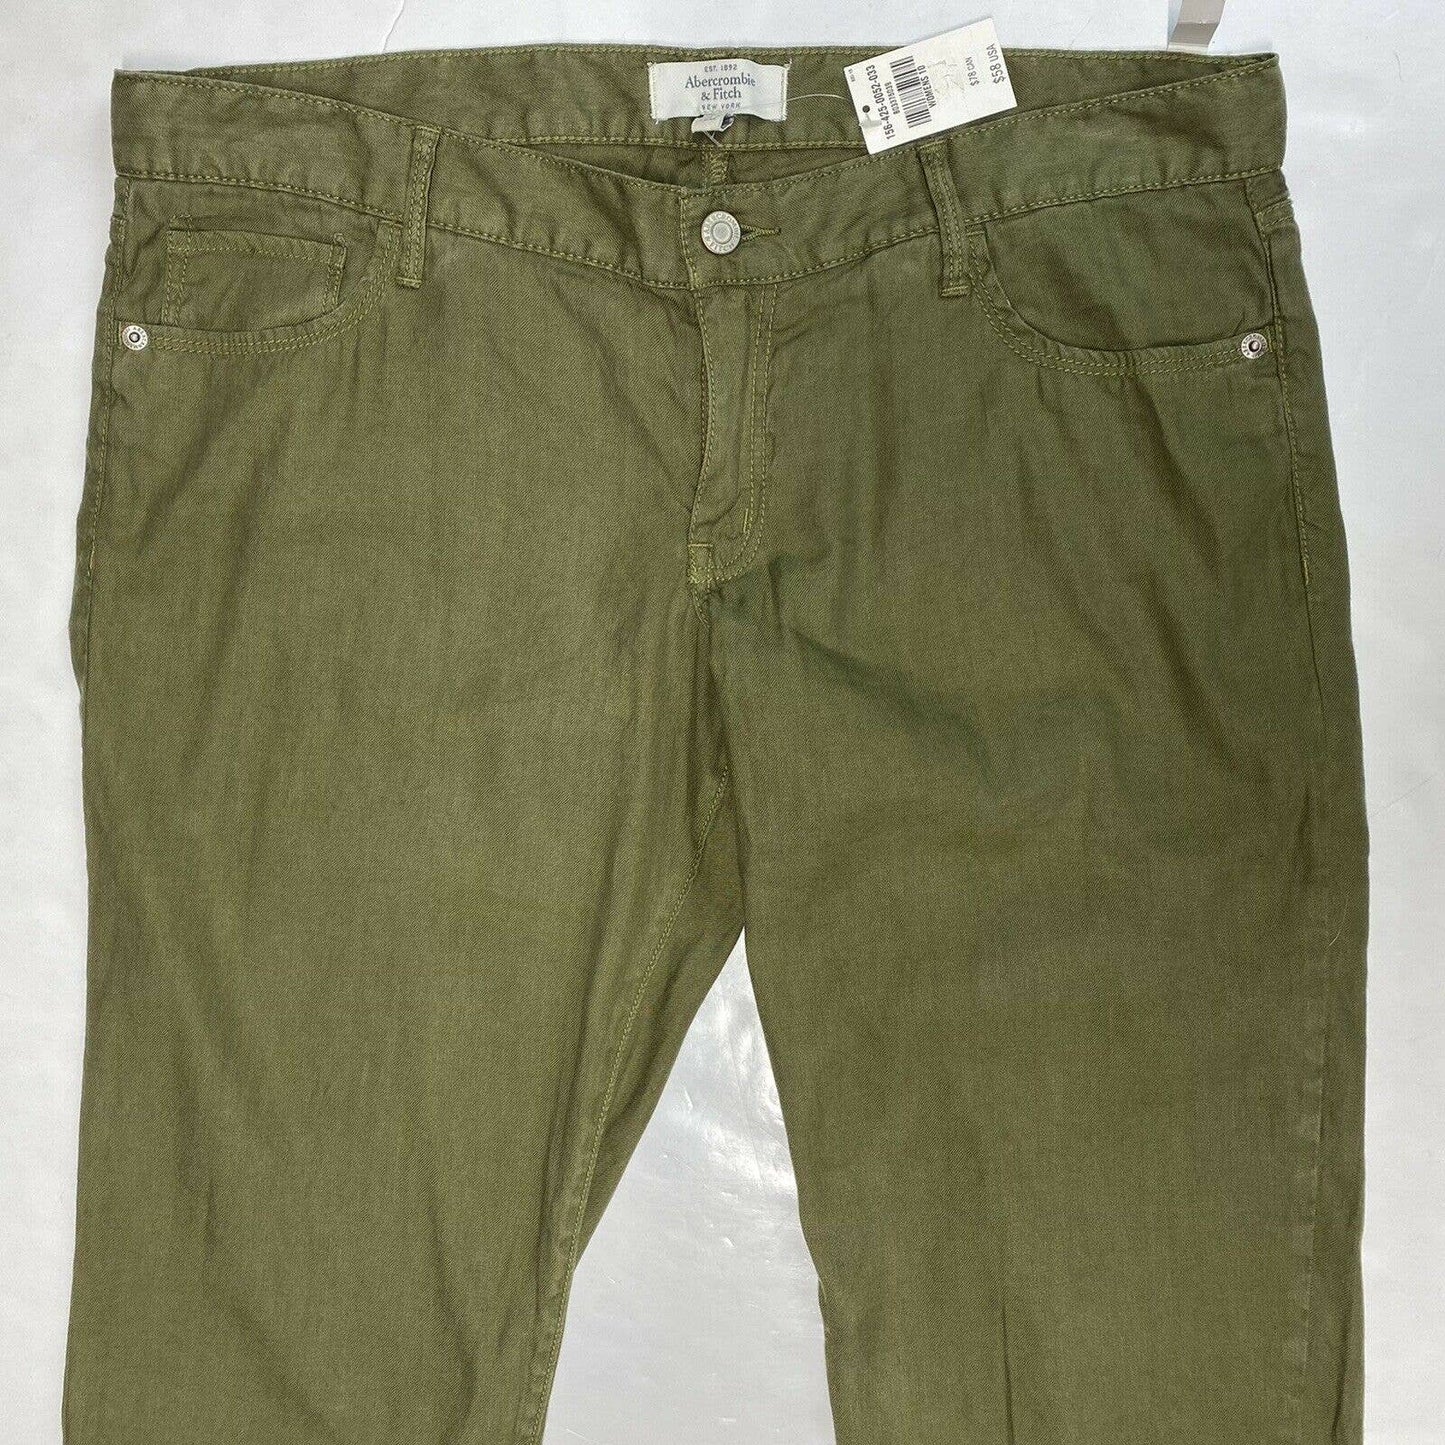 Abercrombie & Fitch Linen Blend Capri Sz 10 Olive Green Pants NEW *Measure Big*